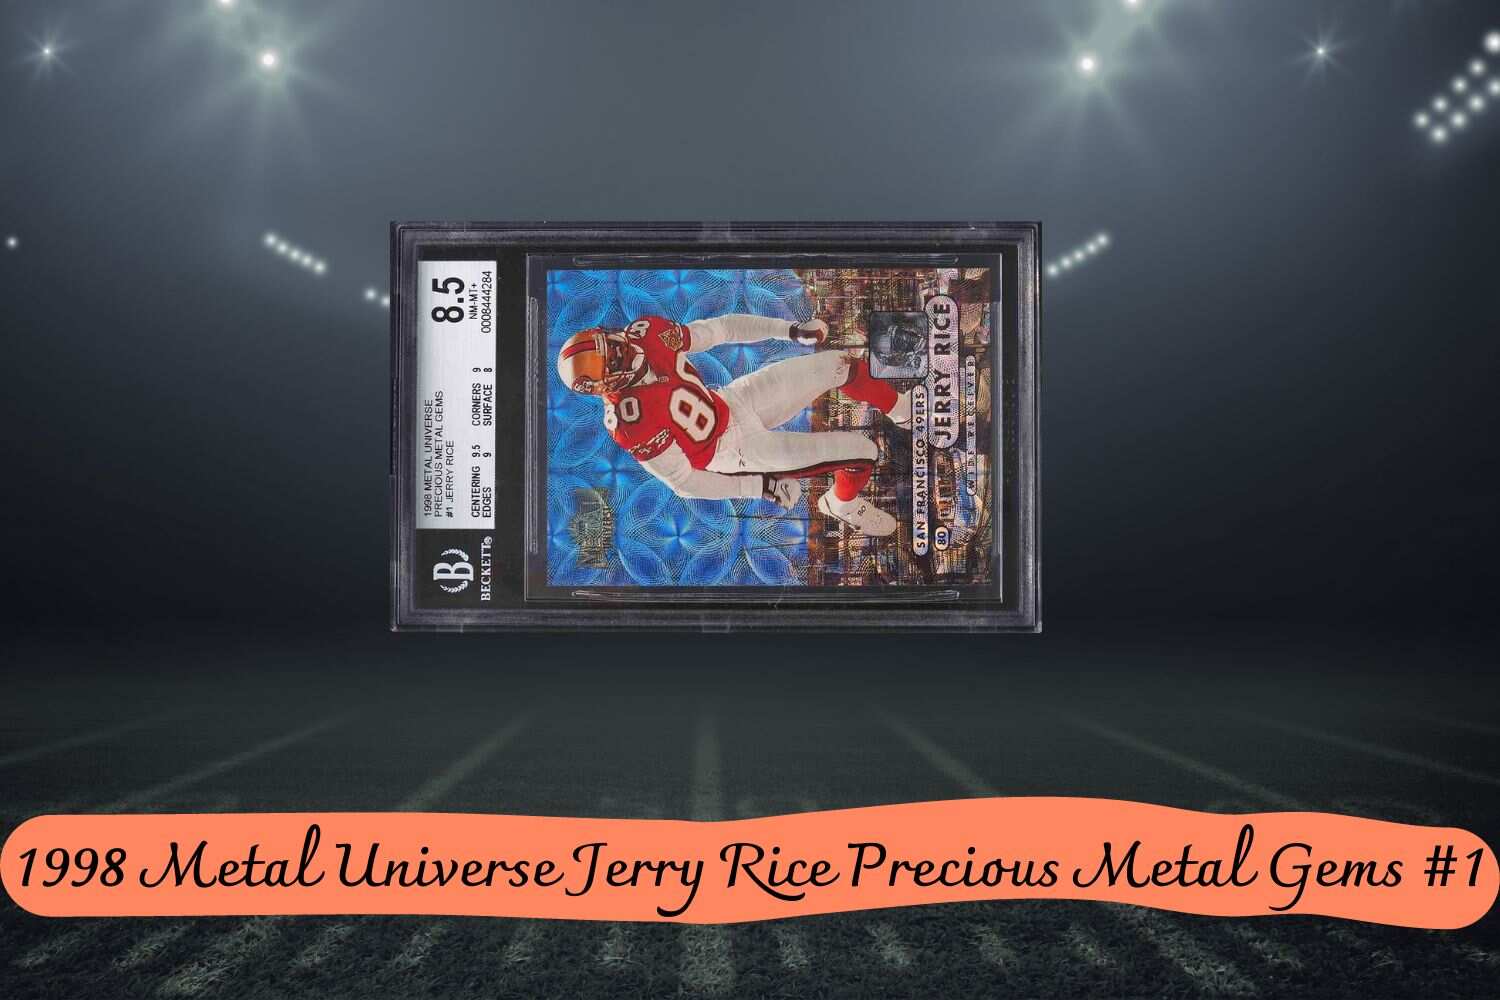 #10 1998 Metal Universe Jerry Rice Precious Metal Gems #1 - Estimate value: $6,500